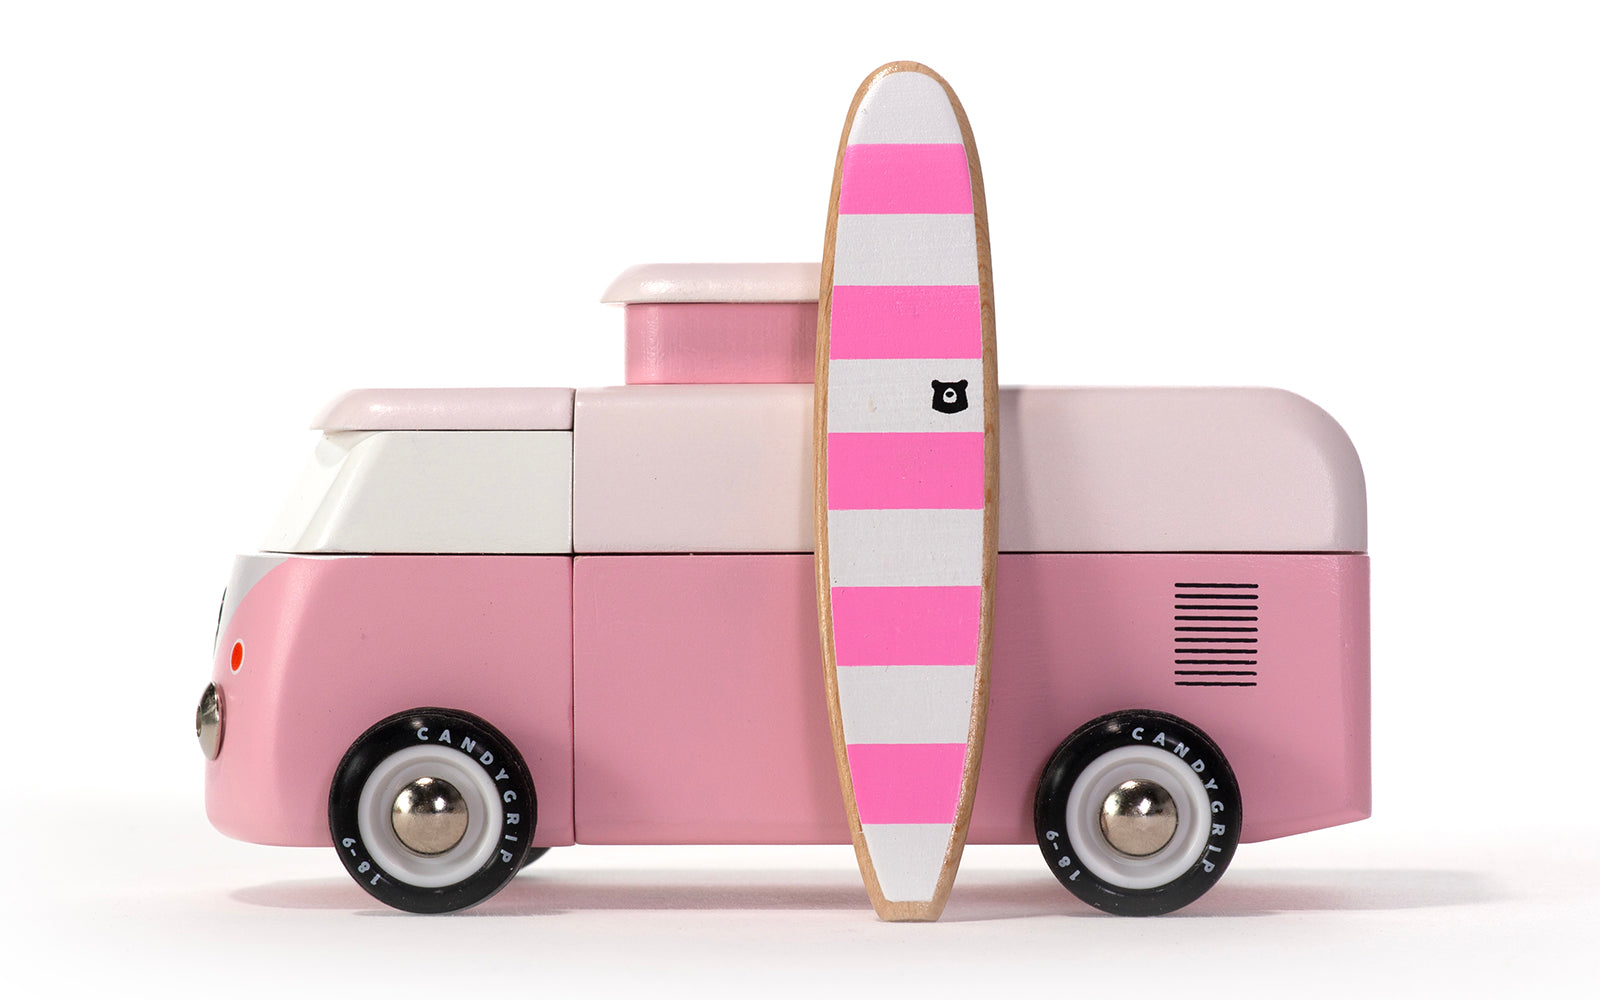 VW Beach Bus Pink